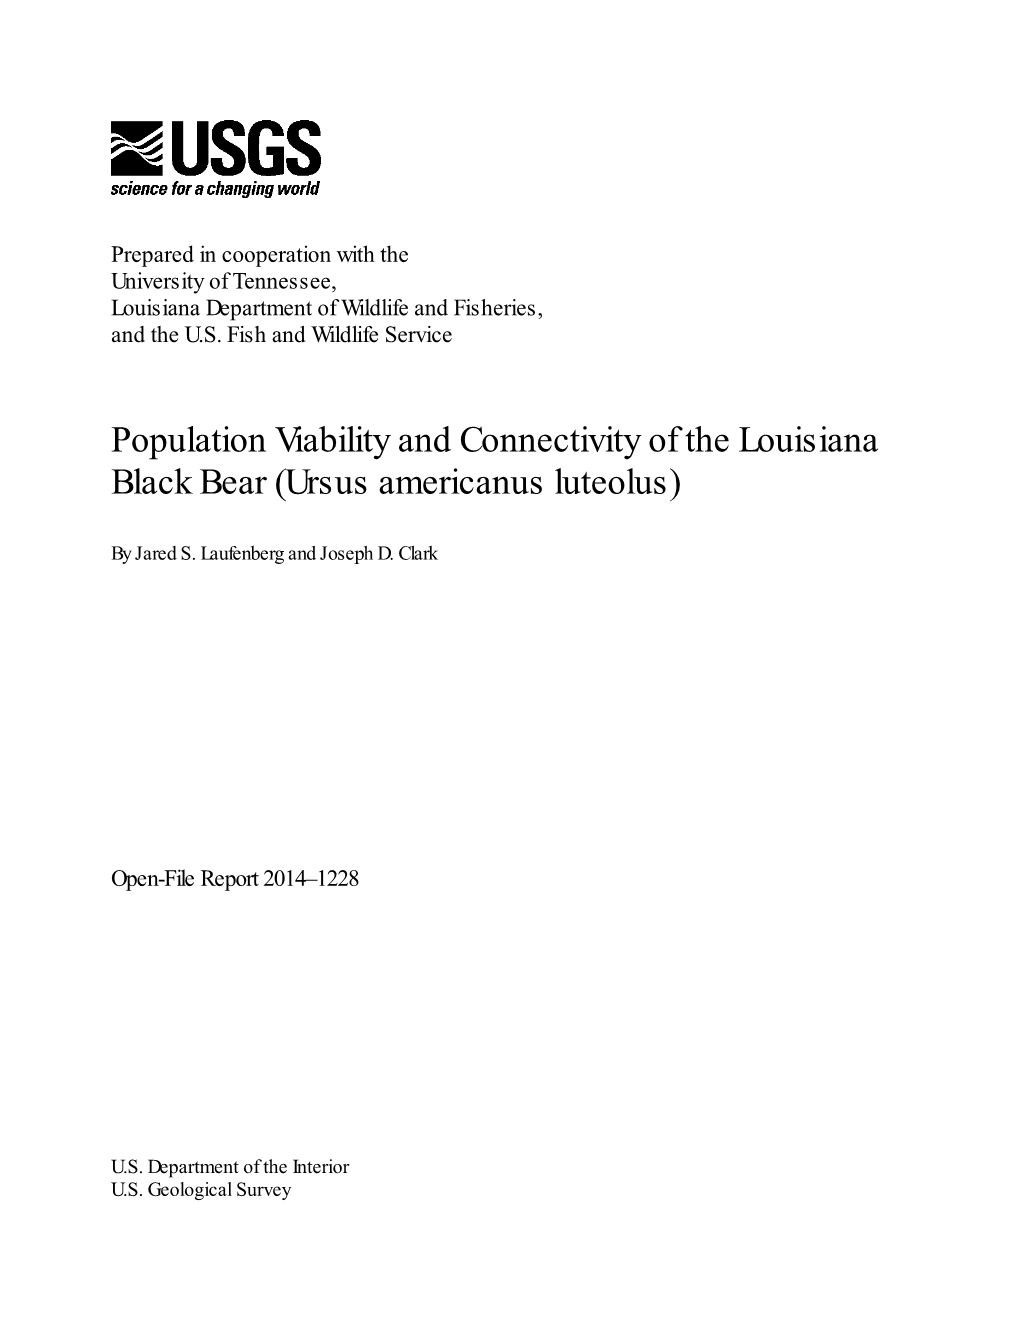 Population Viability and Connectivity of the Louisiana Black Bear (Ursus Americanus Luteolus)